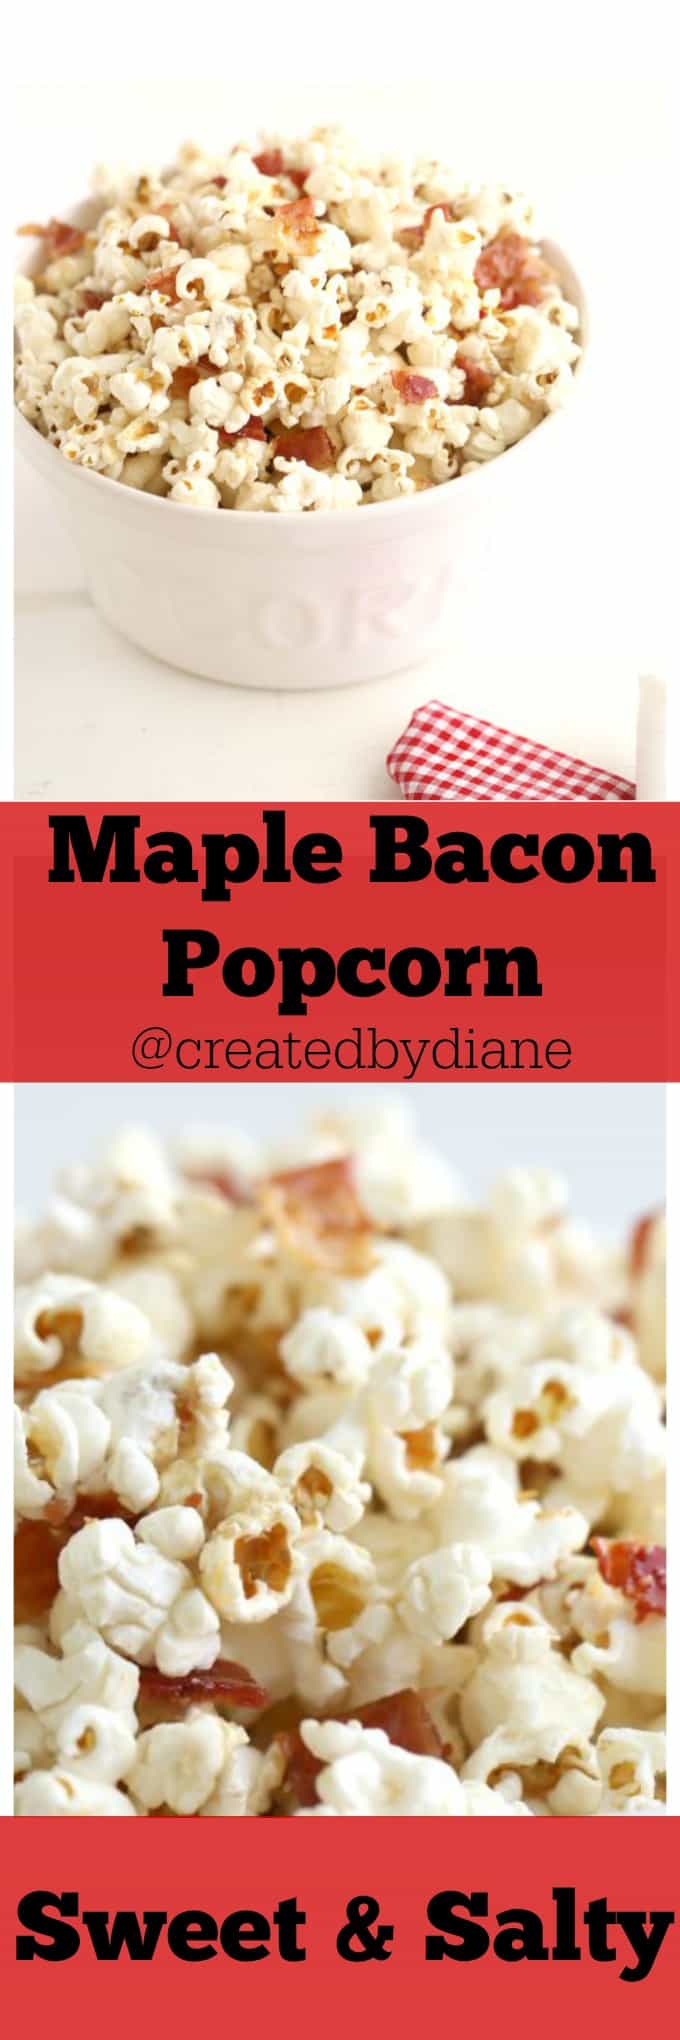 Maple Bacon Popcorn @createdbydiane